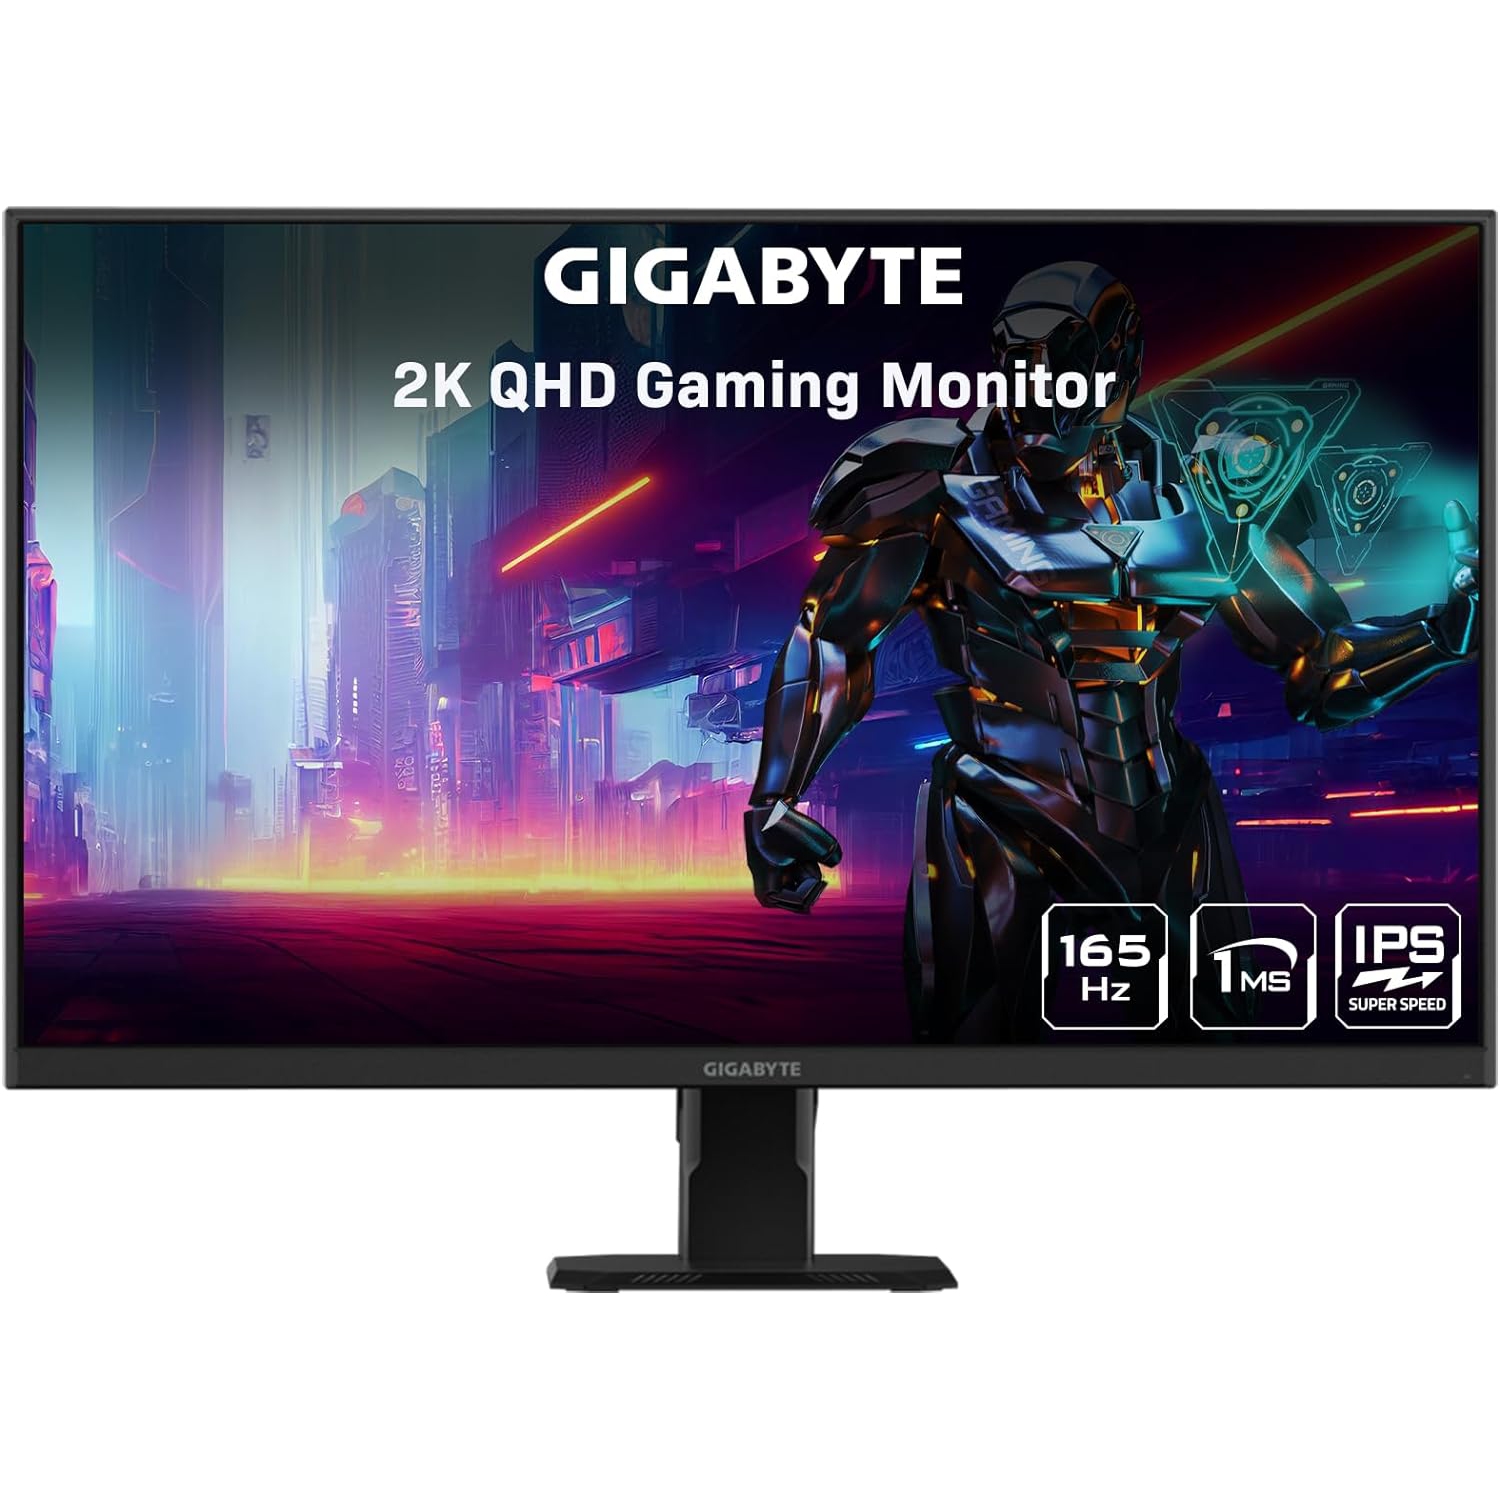 GIGABYTE GS27Q 27" 165Hz 1440P Gaming Monitor, 2560 x 1440 SS IPS Display, 1ms (MPRT) Response Time, HDR Ready, FreeSync Premium, 1x Display Port 1.4, 2X HDMI 2.0